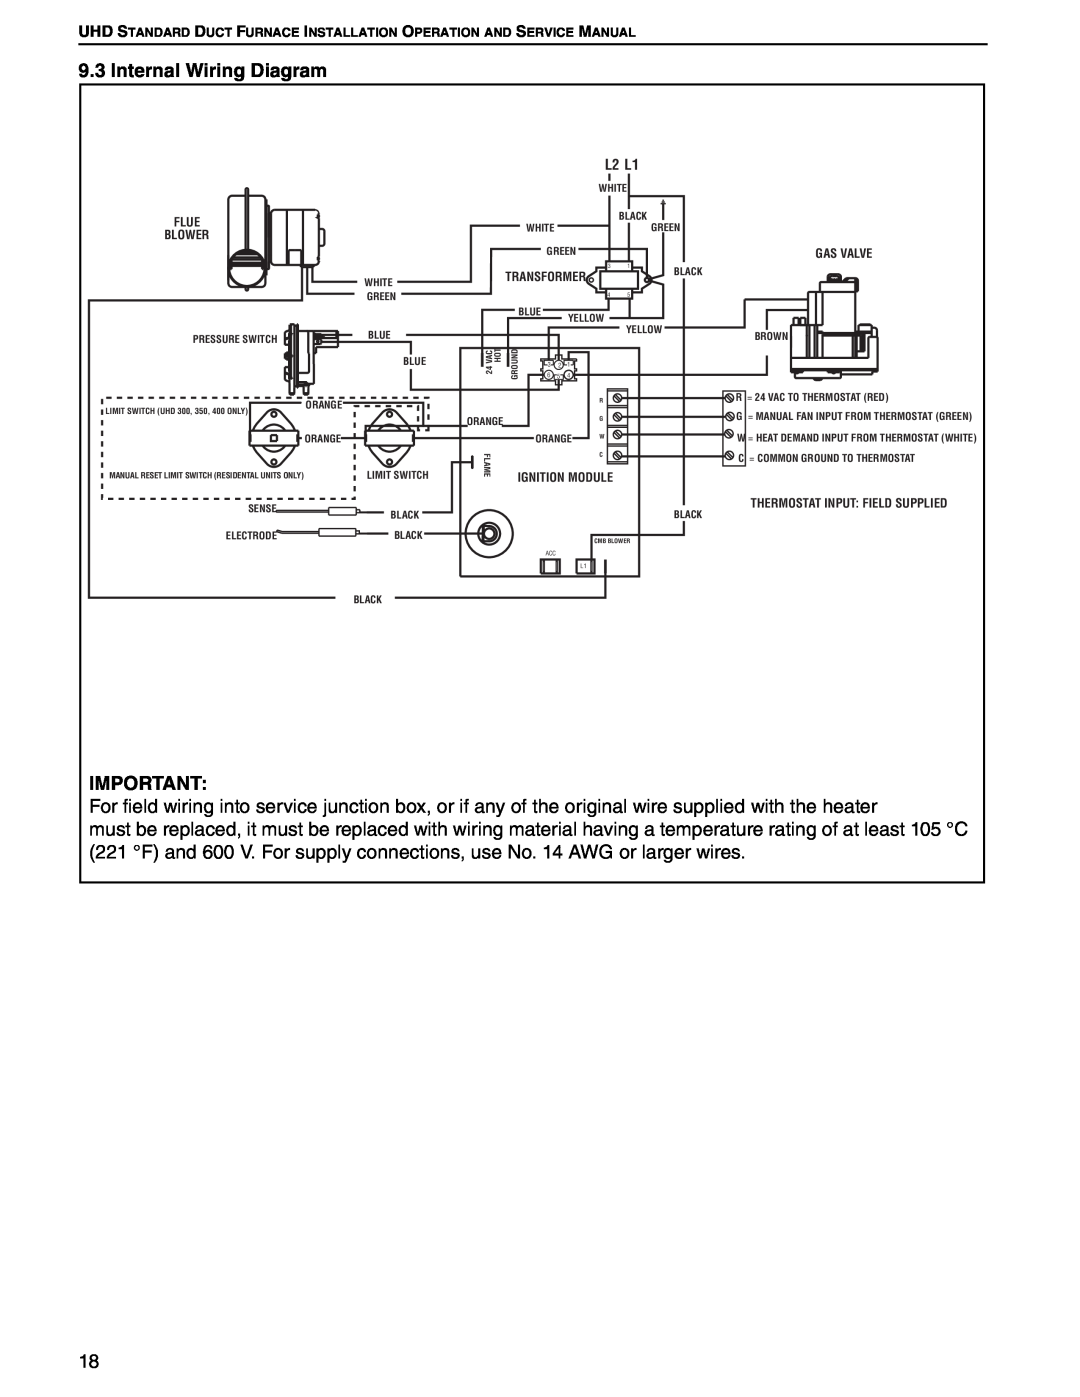 Roberts Gorden UHD[X][S][R] 300, UHD[X][S][R] 250, UHD[X][S][R] 400, UHD[X][S][R] 350 service manual Internal Wiring Diagram 